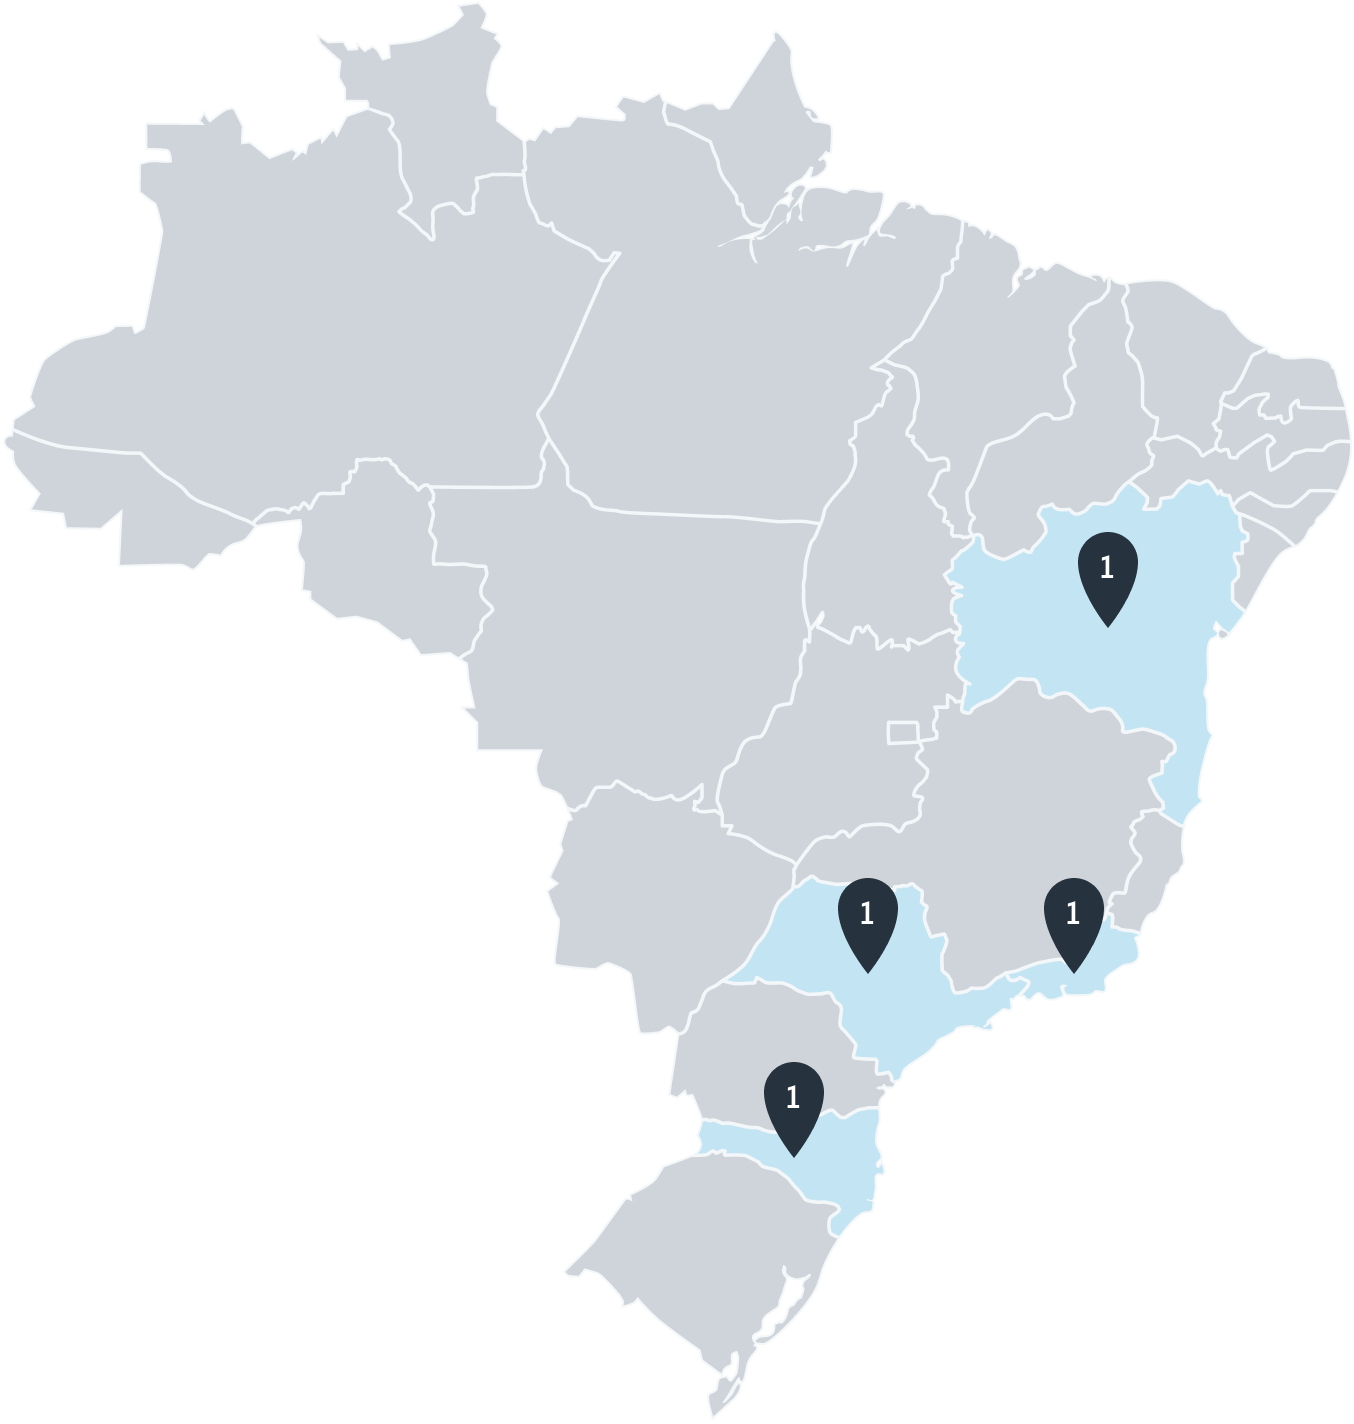 Brazil Map